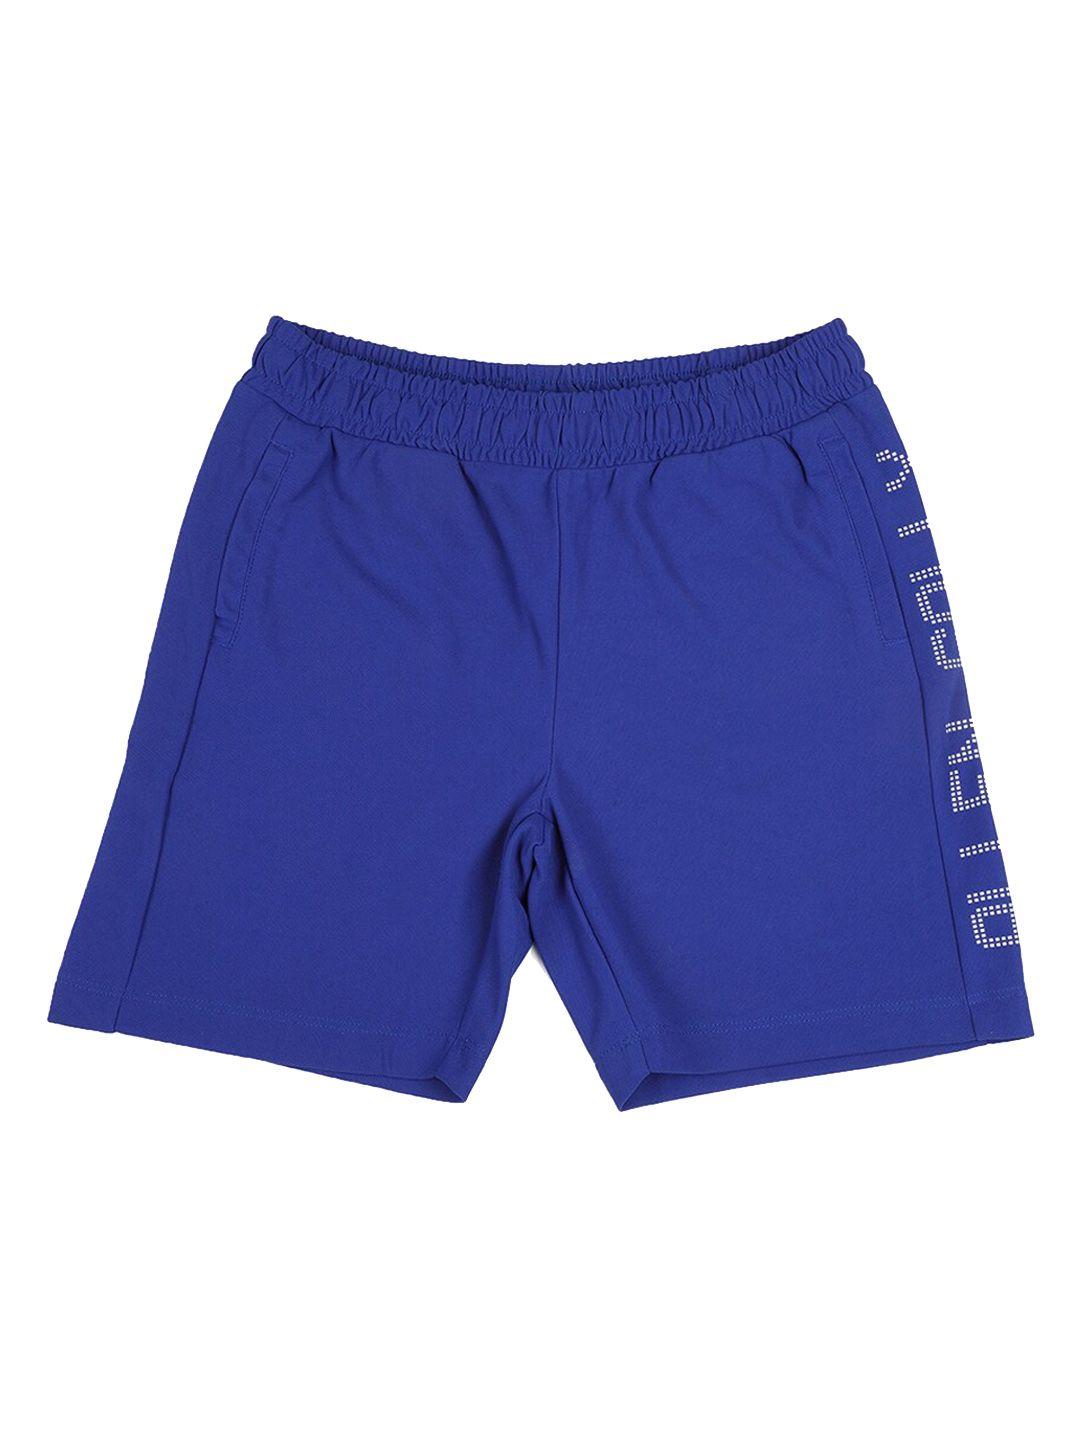 allen-solly-junior-boys-blue-shorts